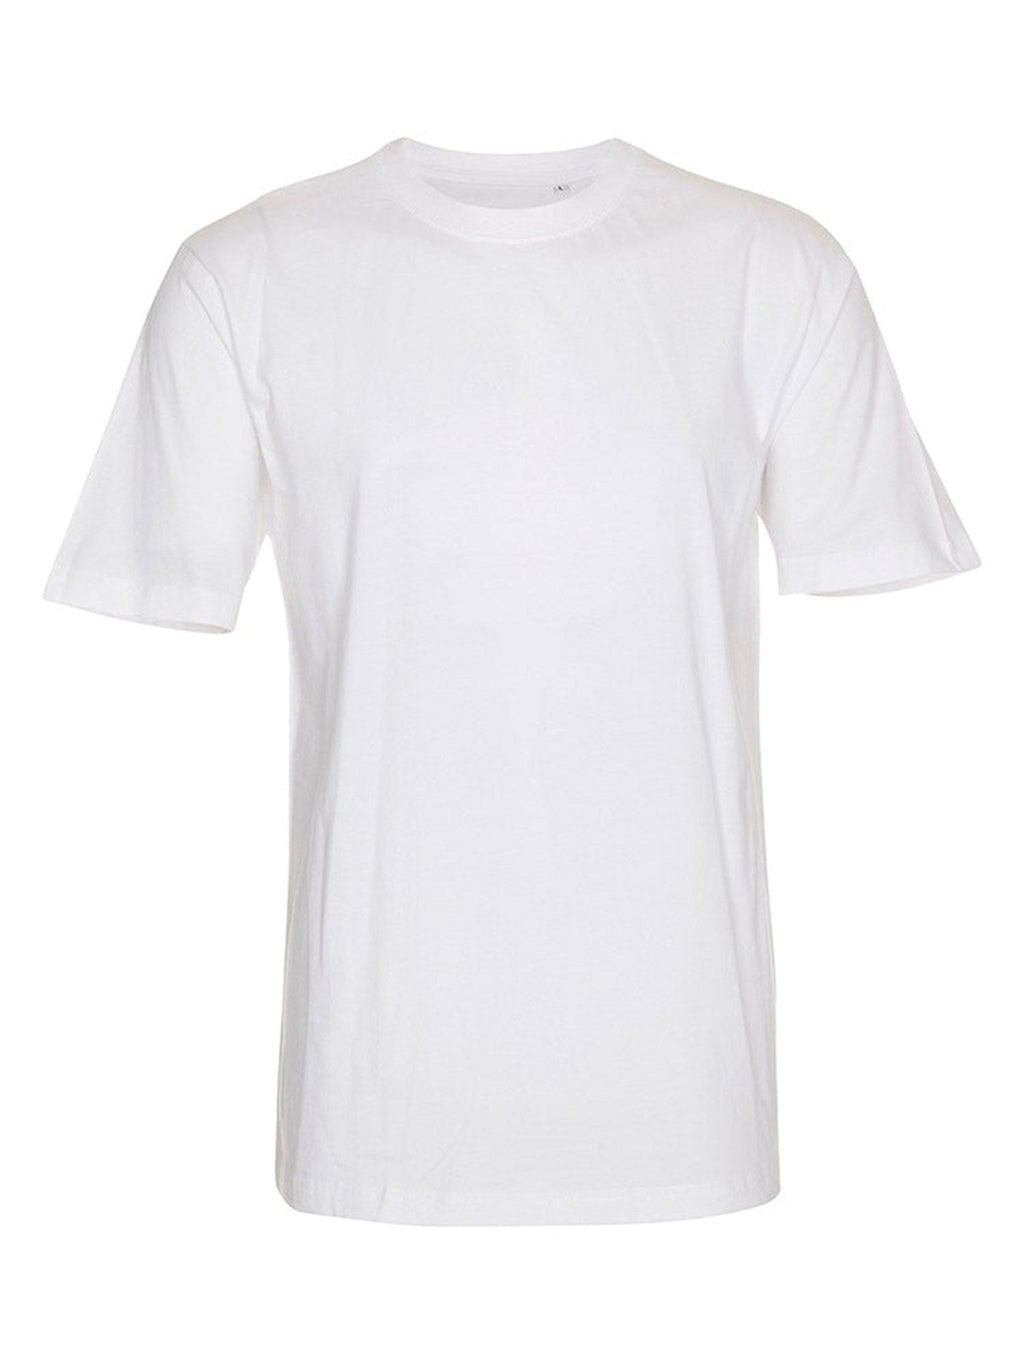 Oversized T-shirt - White